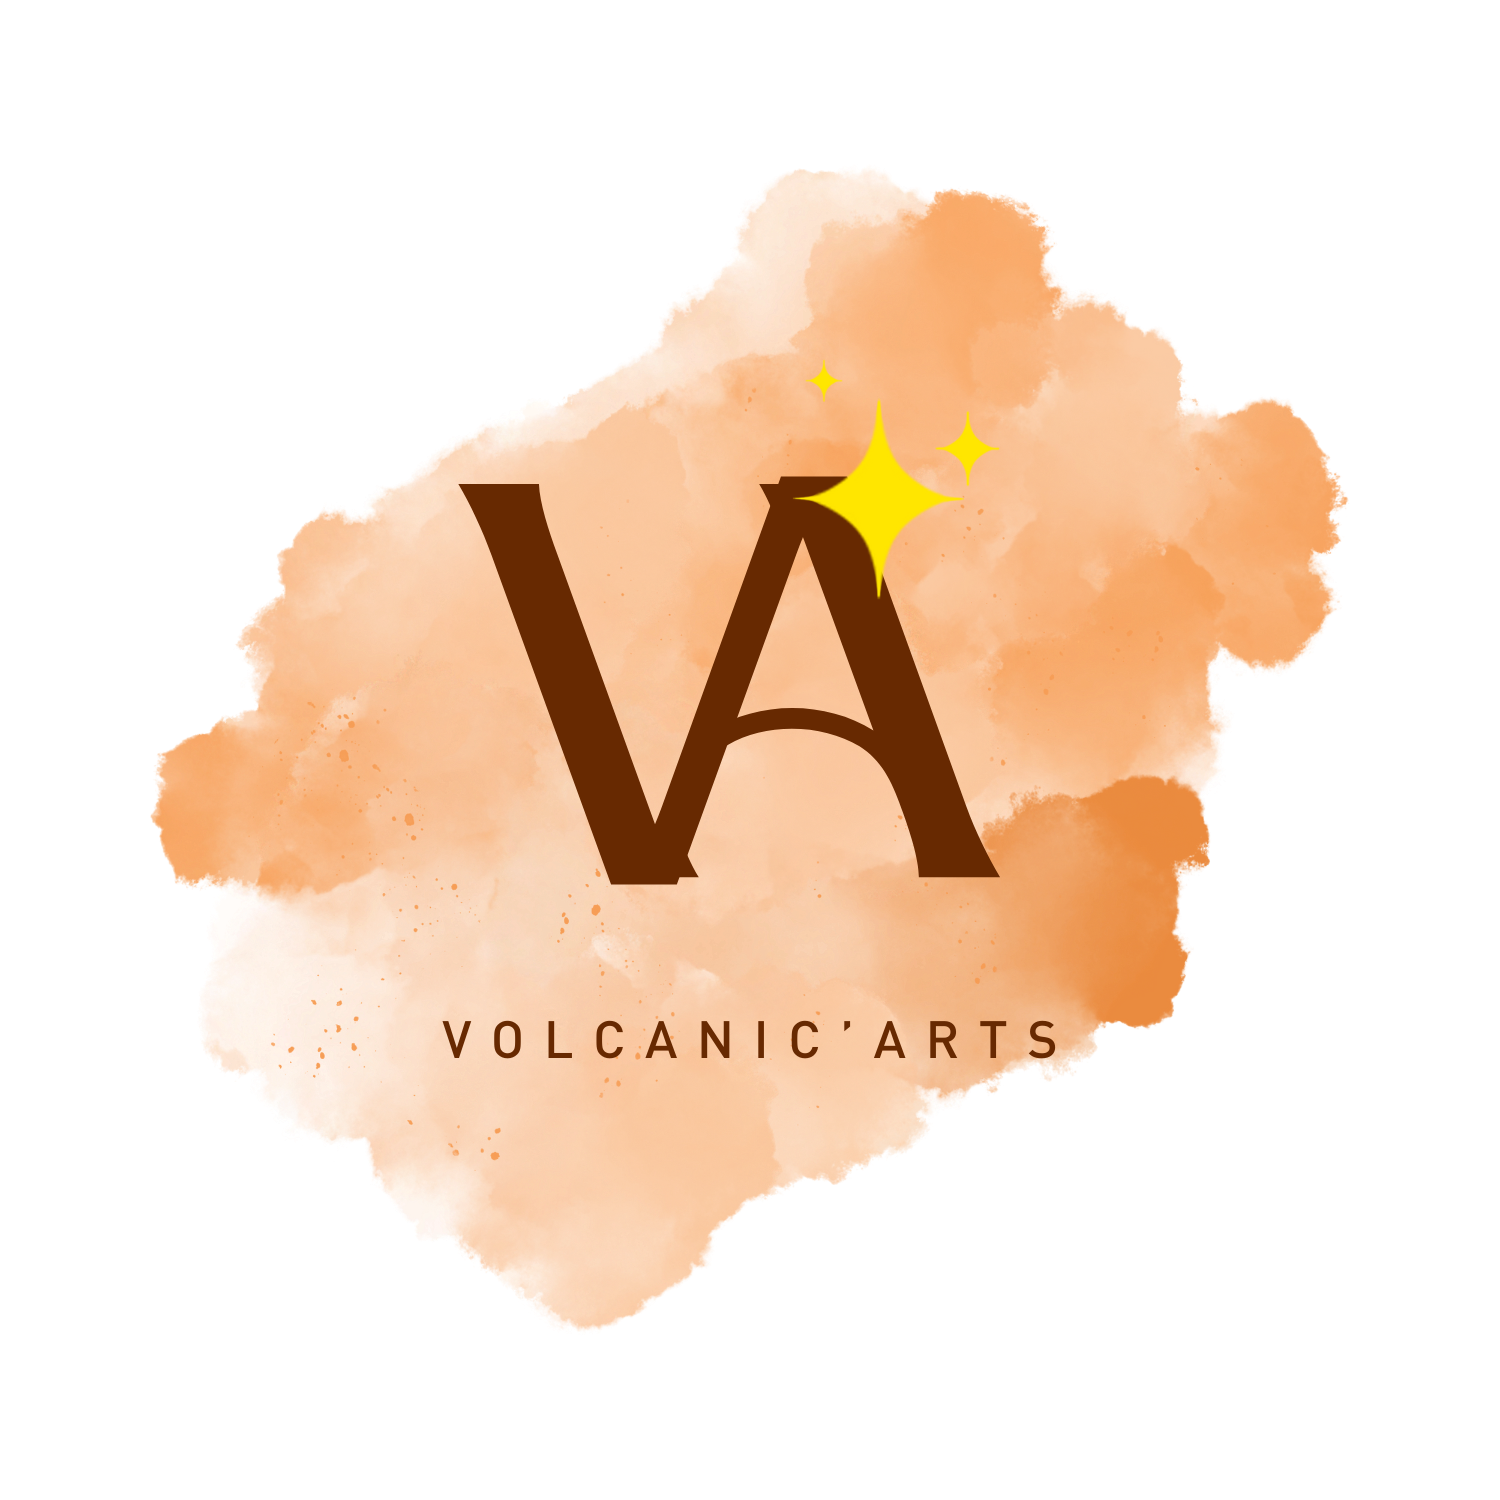 Volcanic'Arts